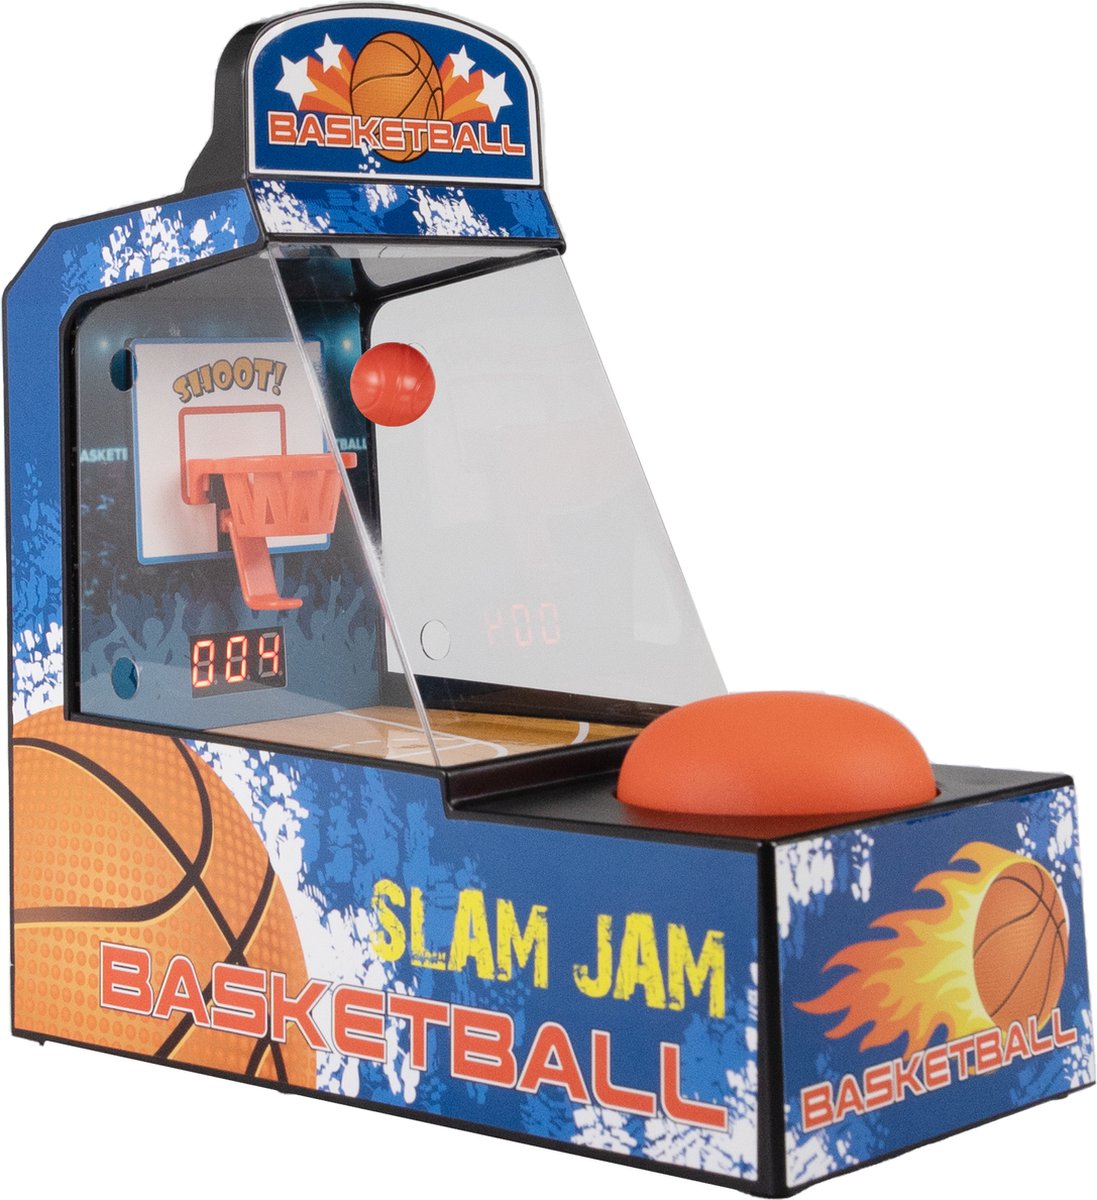 Mini machine d'arcade - Jeu de basket-ball - Silvergear